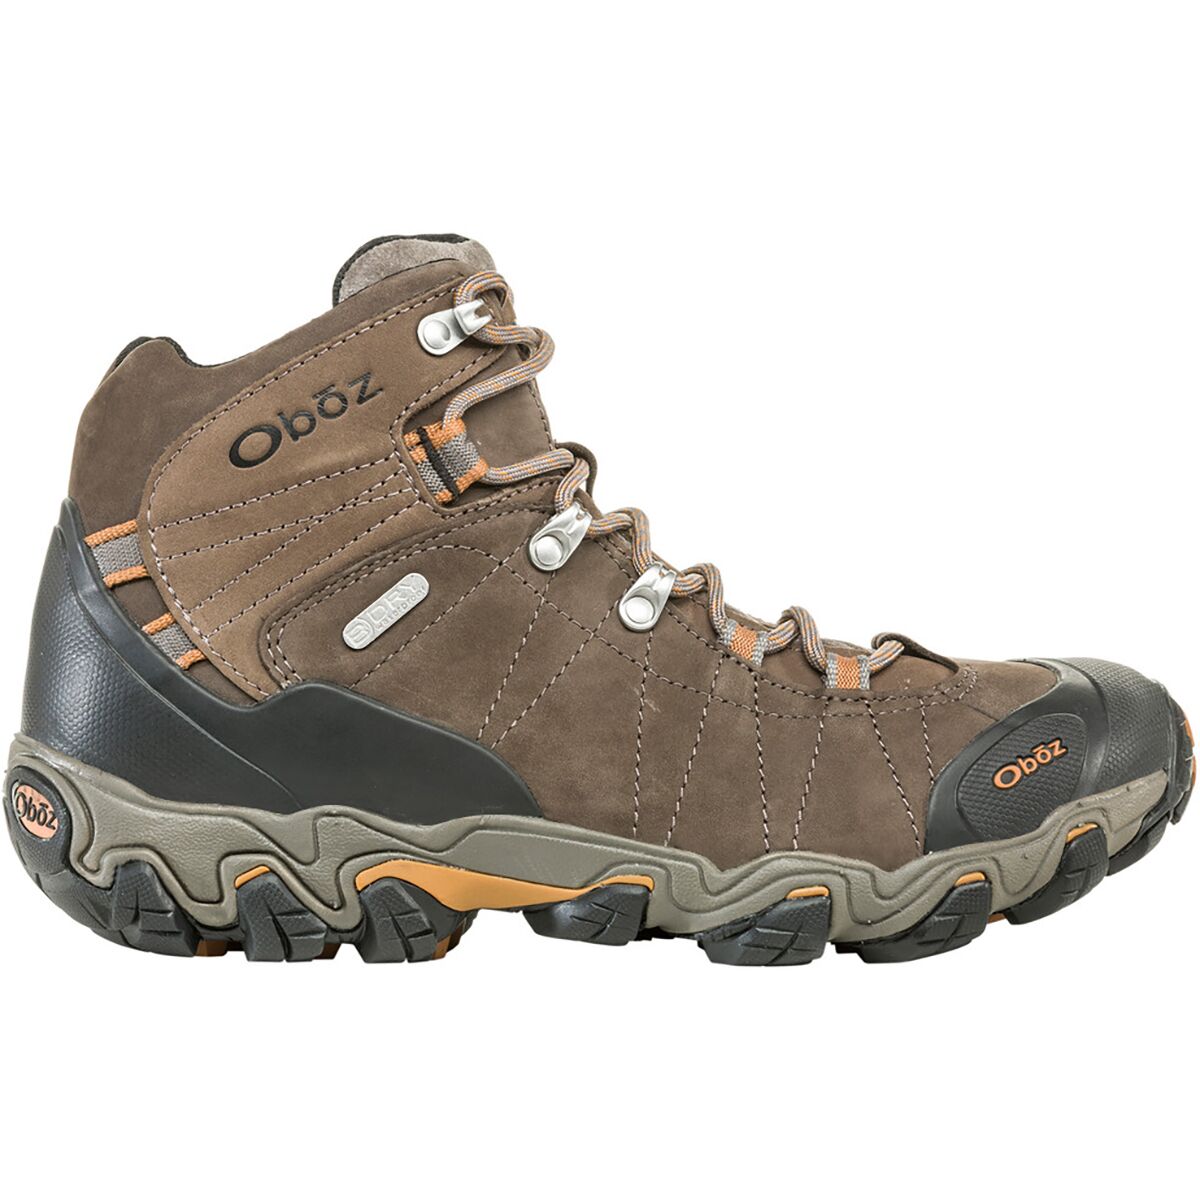 Oboz Bridger Mid B-Dry Wide Hiking Boot - Men's